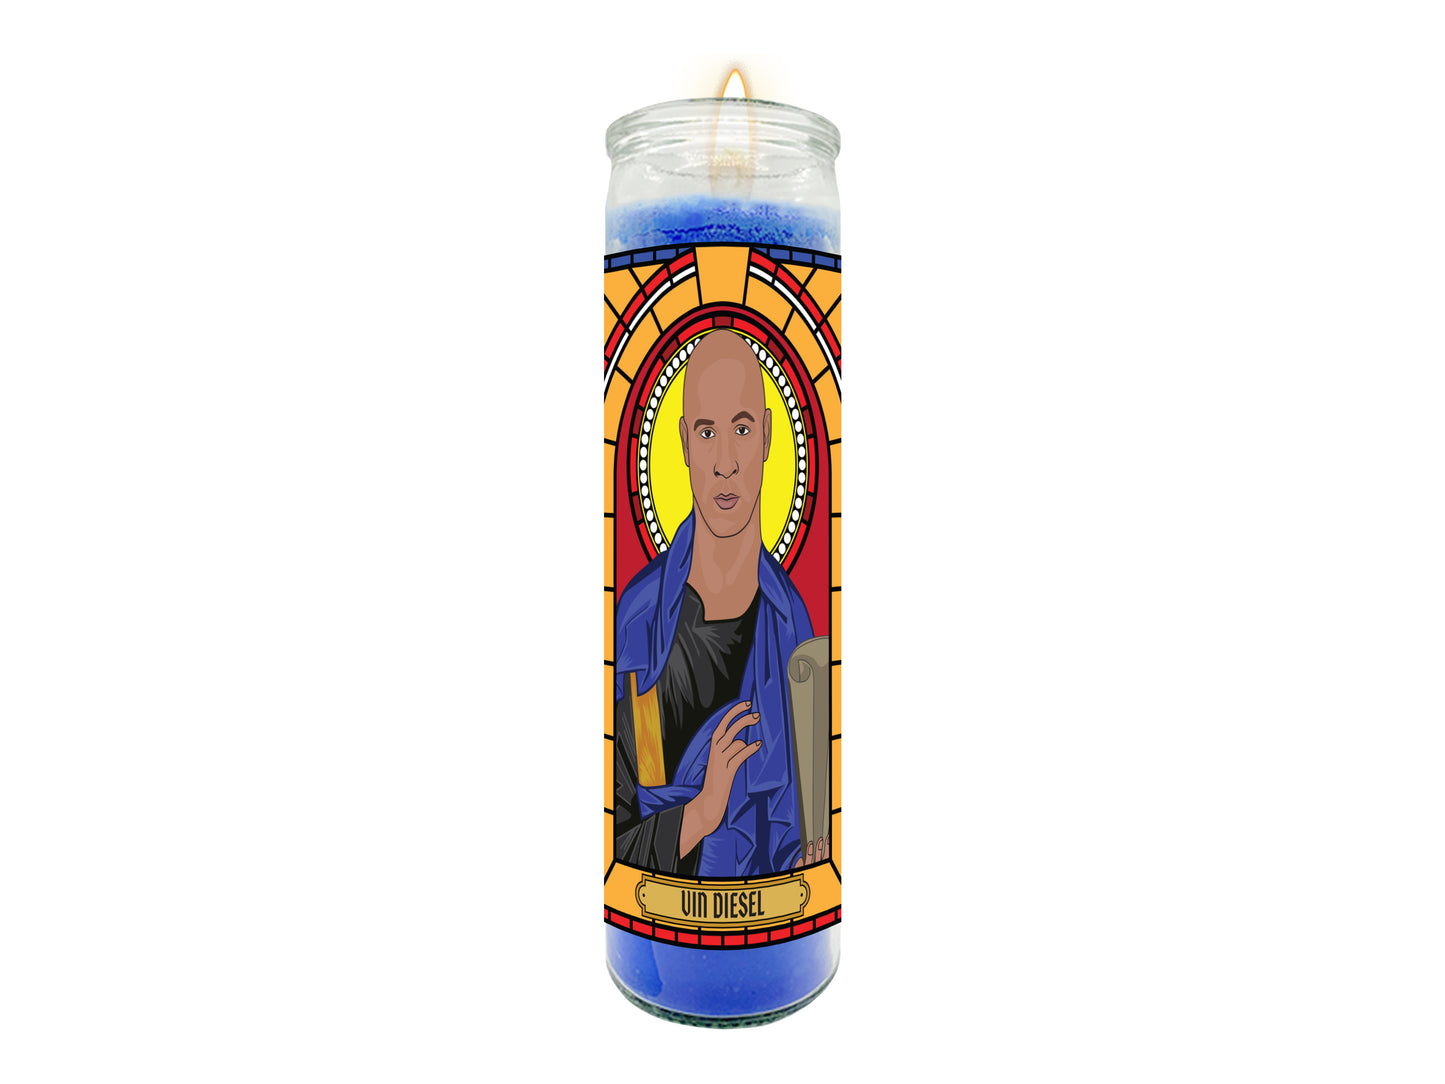 Vin Diesel Illustrated Prayer Candle